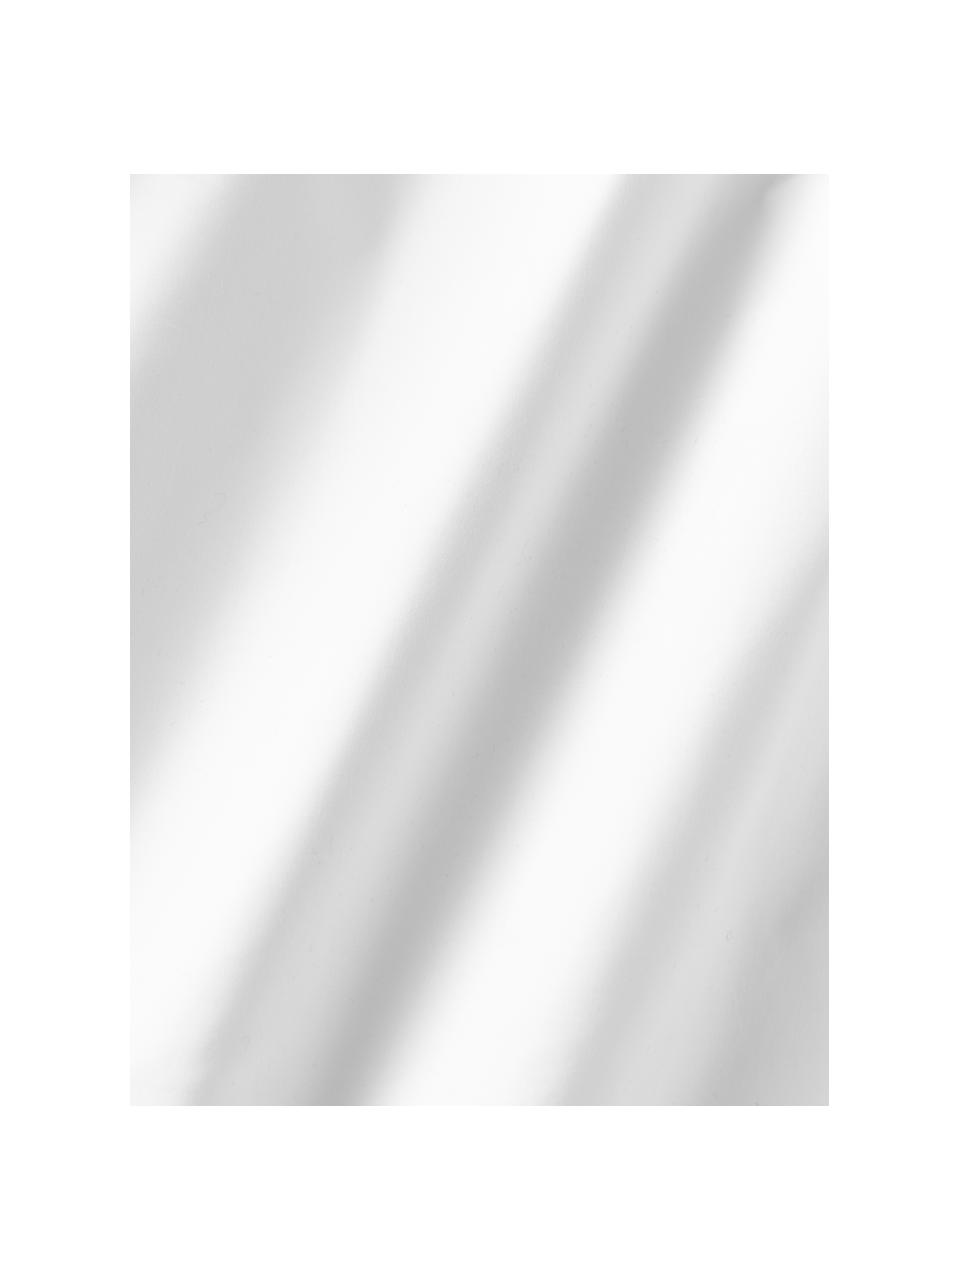 Hoeslaken Elsie, katoen perkal, Weeftechniek: perkal Draaddichtheid 200, Wit, B 140 x L 200 cm, H 25 cm